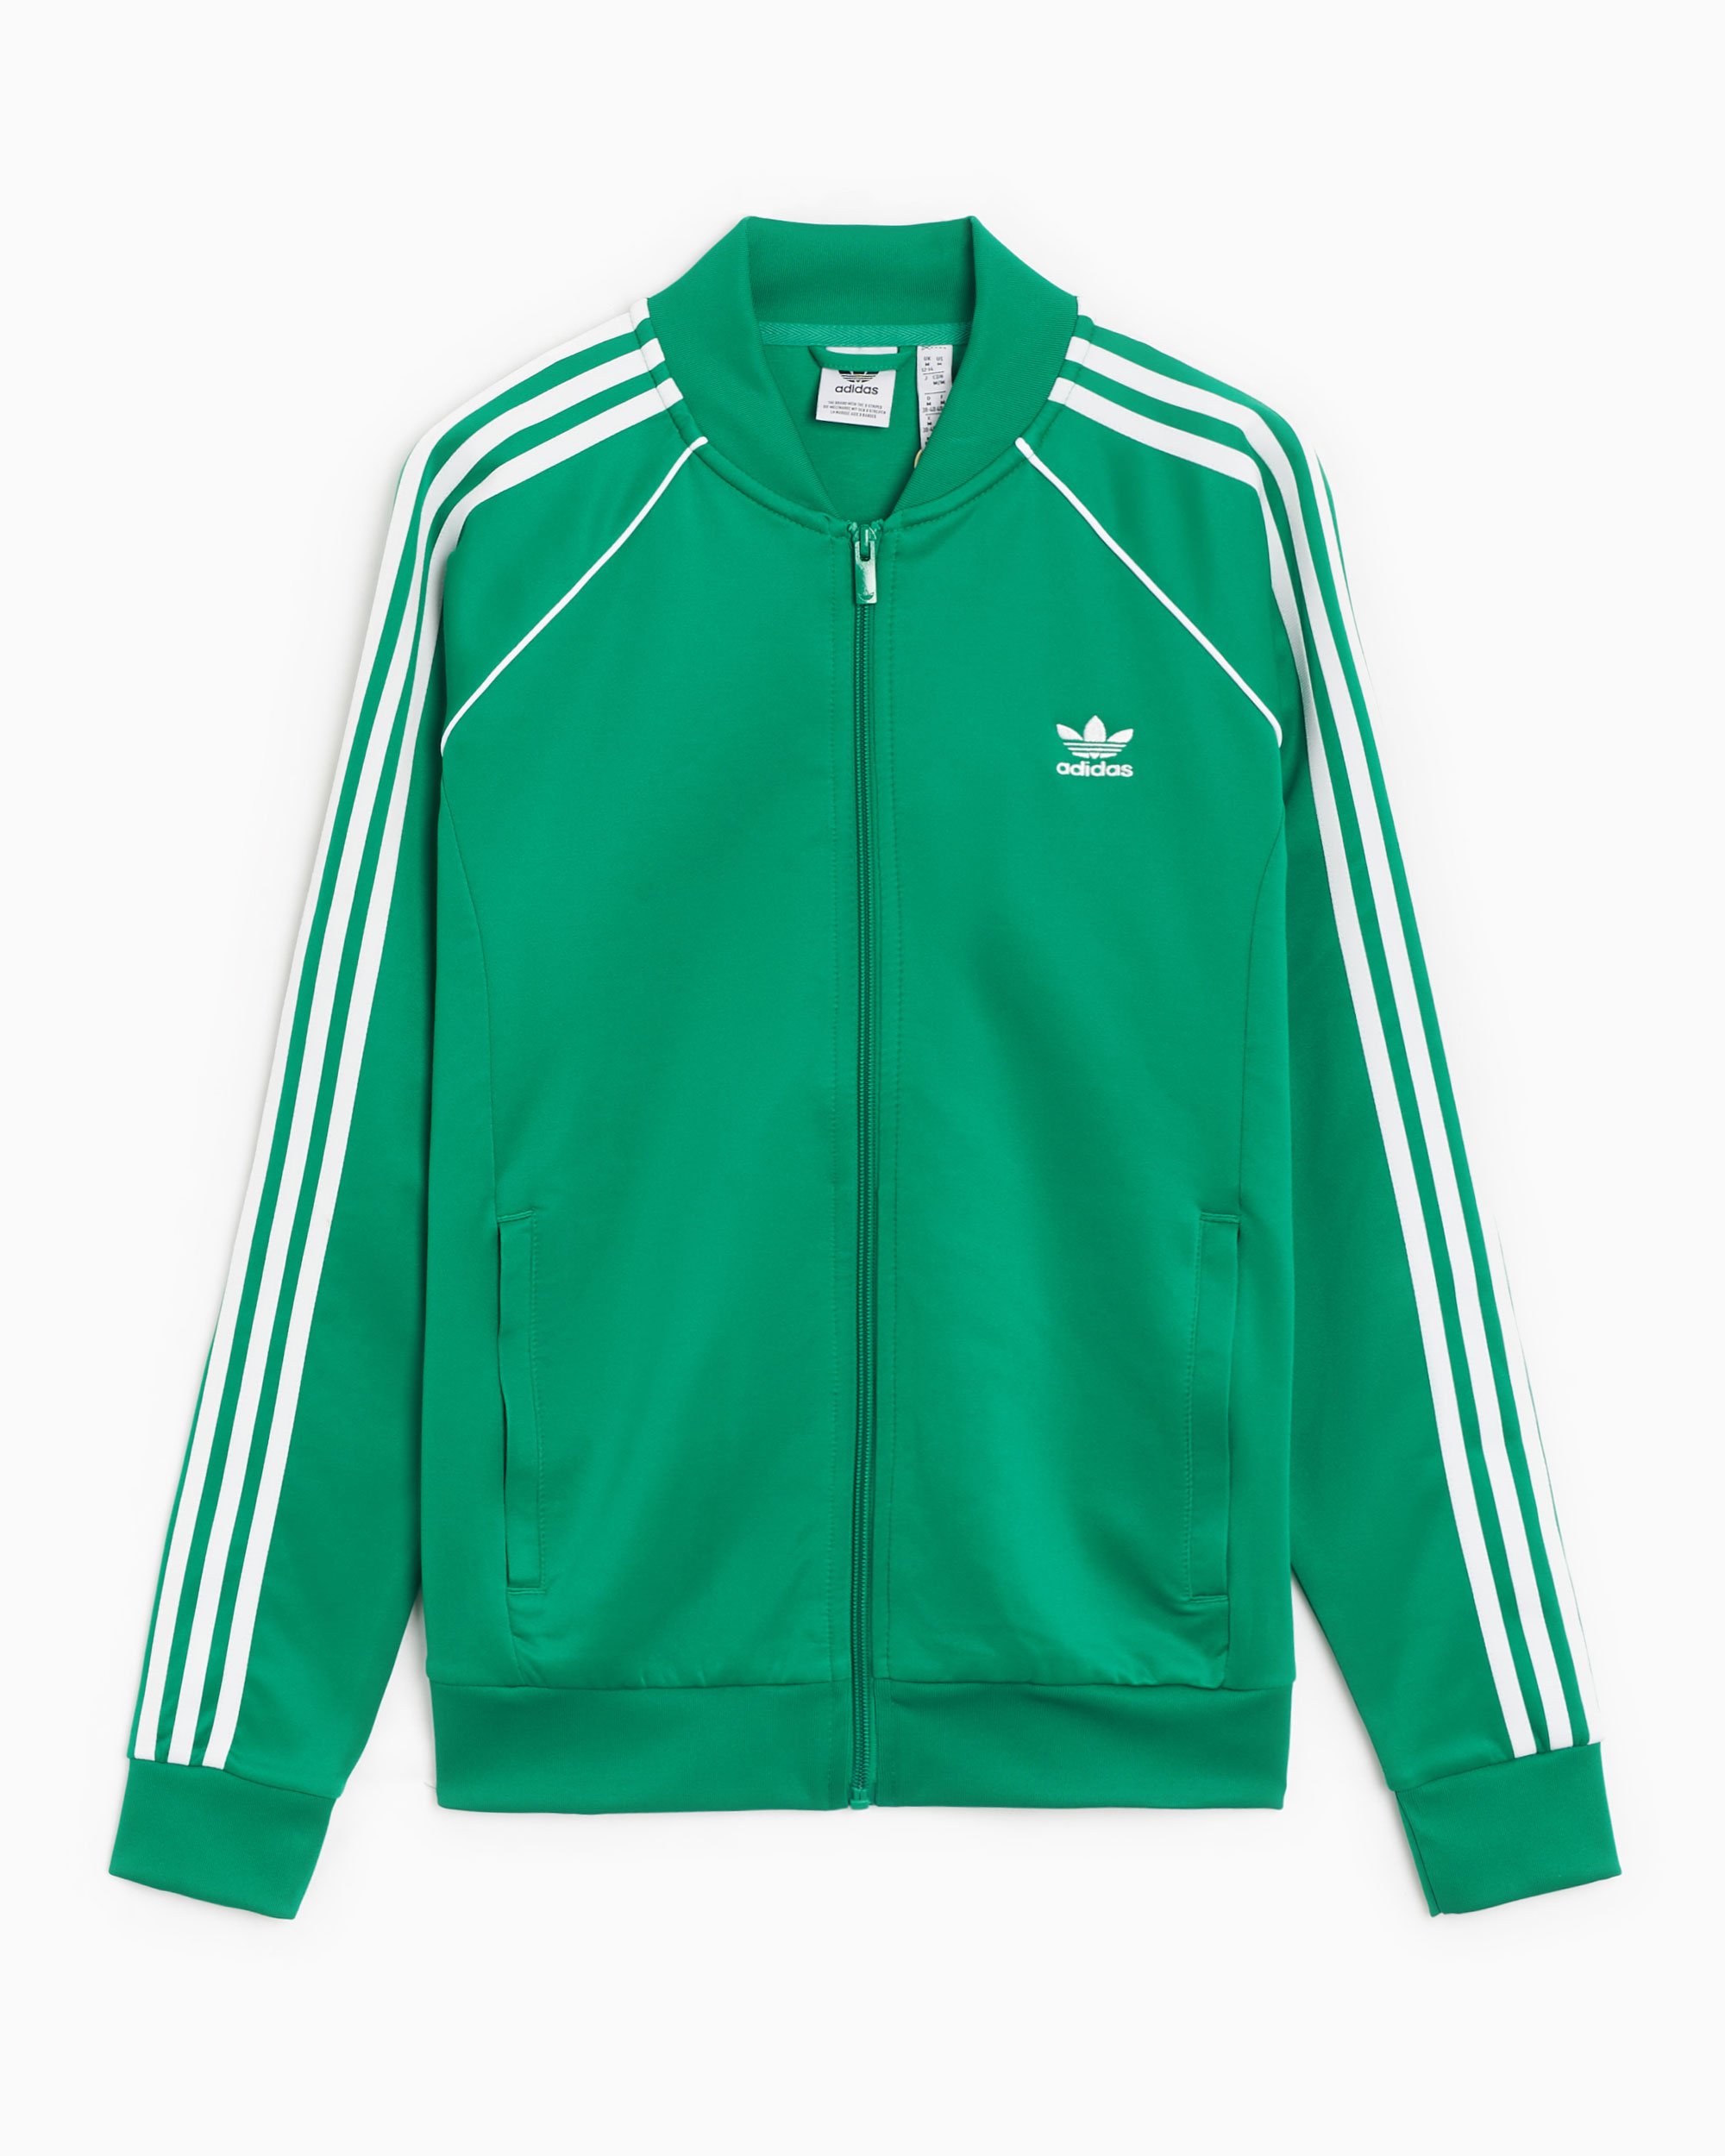 adidas Originals SST Men's Track Jacket Green IK4030| Buy Online at ...